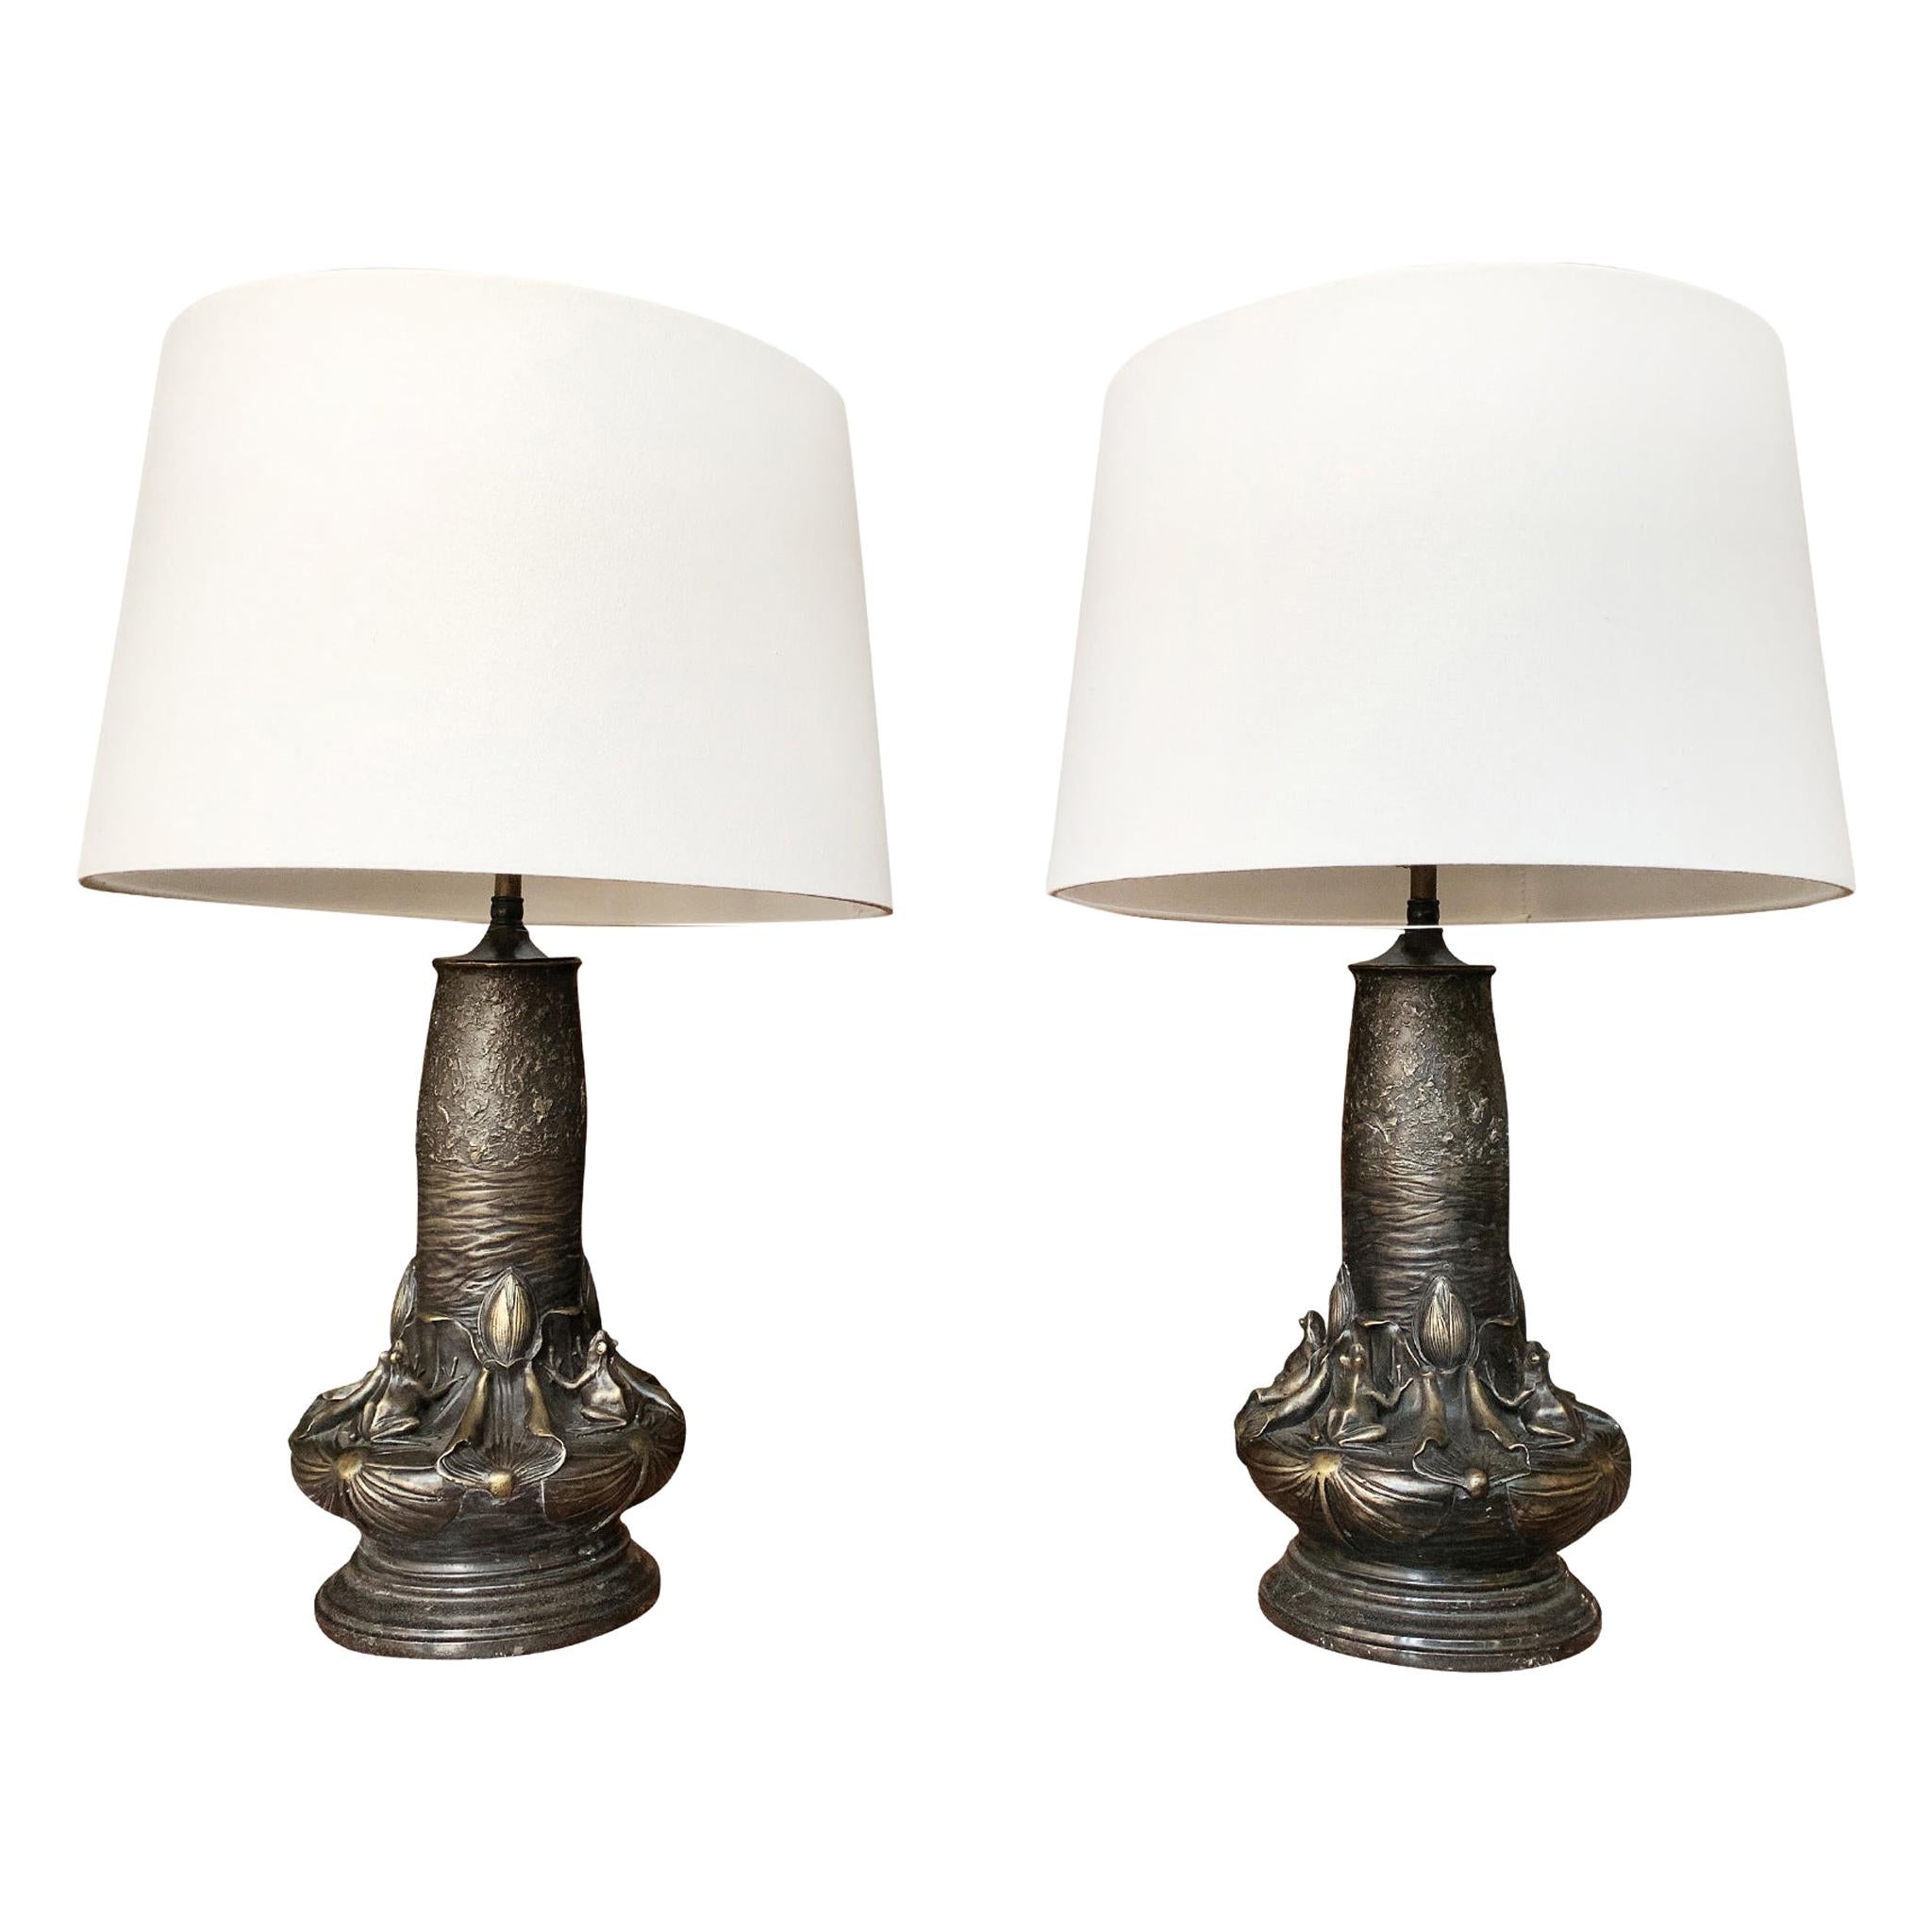 Pair of 20th Century Art Nouveau Style Bronze Table Lamps